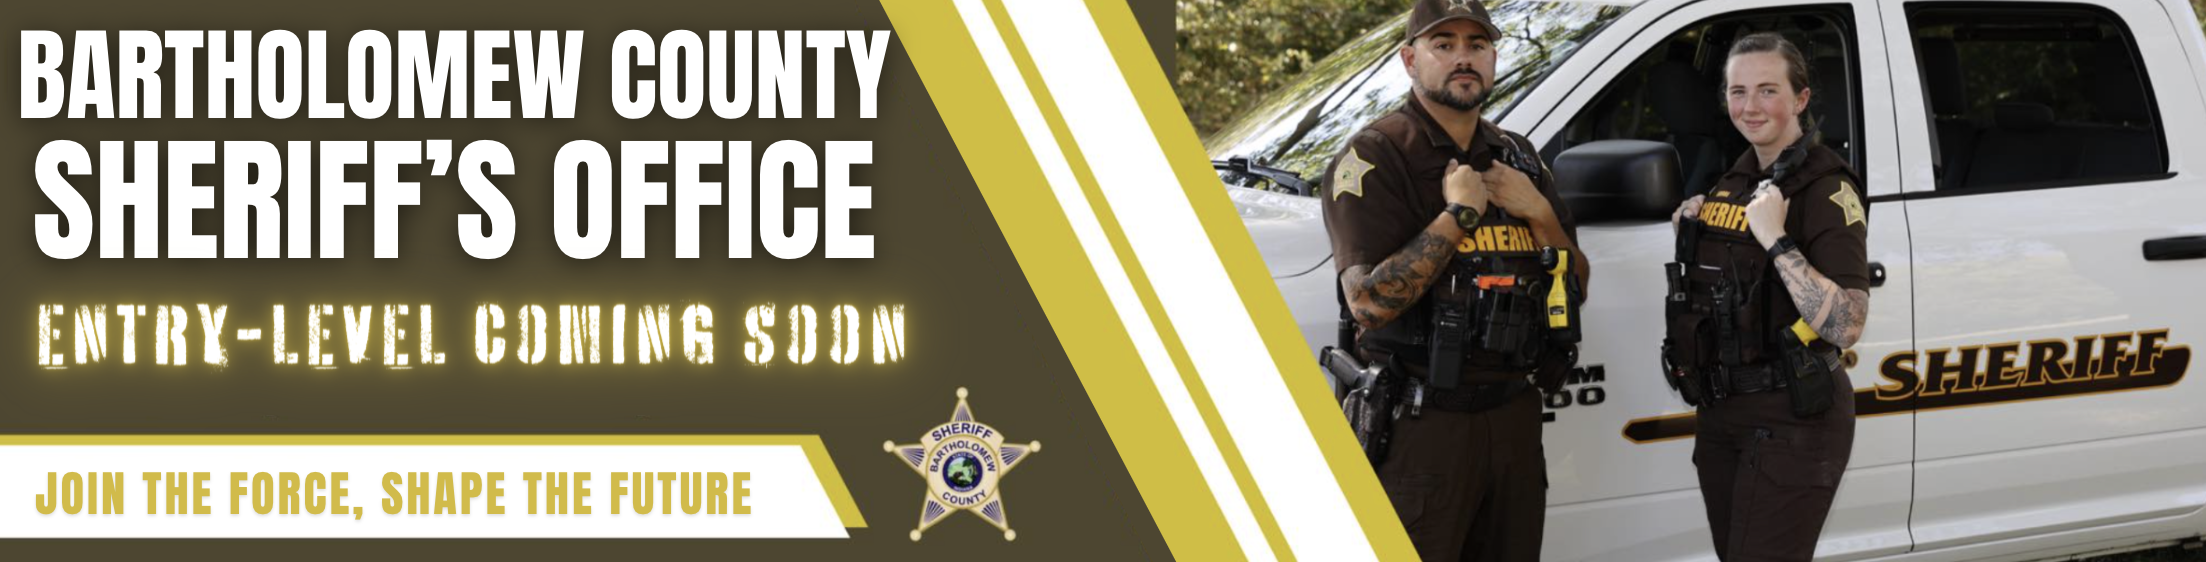 Bartholomew County Sheriff Department, IN 